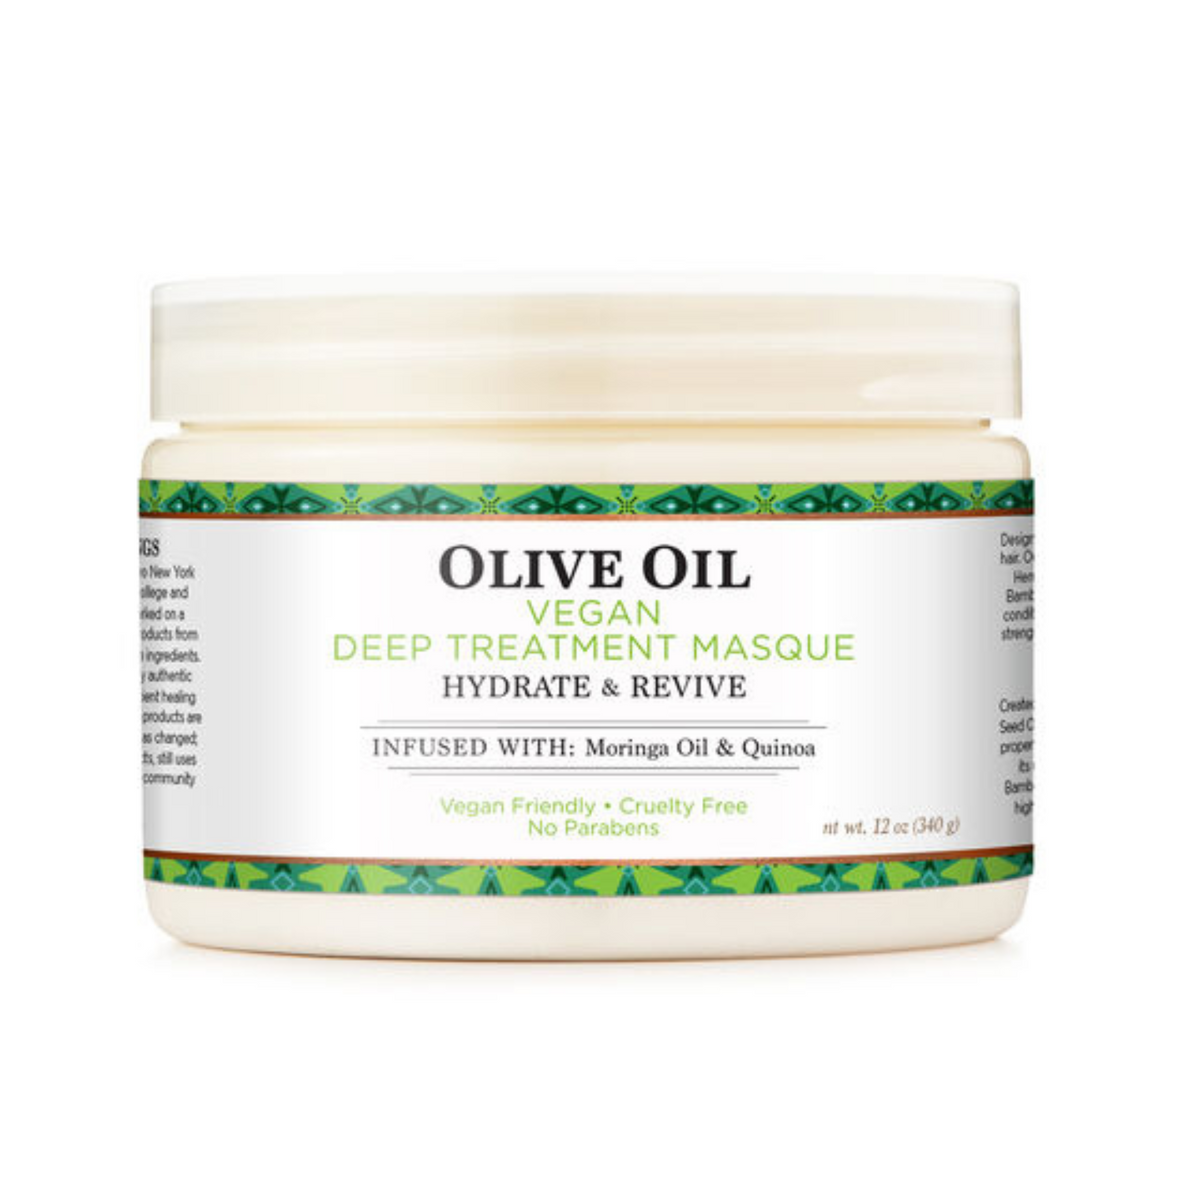 Primary Image of Nubian Heritage Olive Oil Vegan Deep Treatment Masque (12 oz)